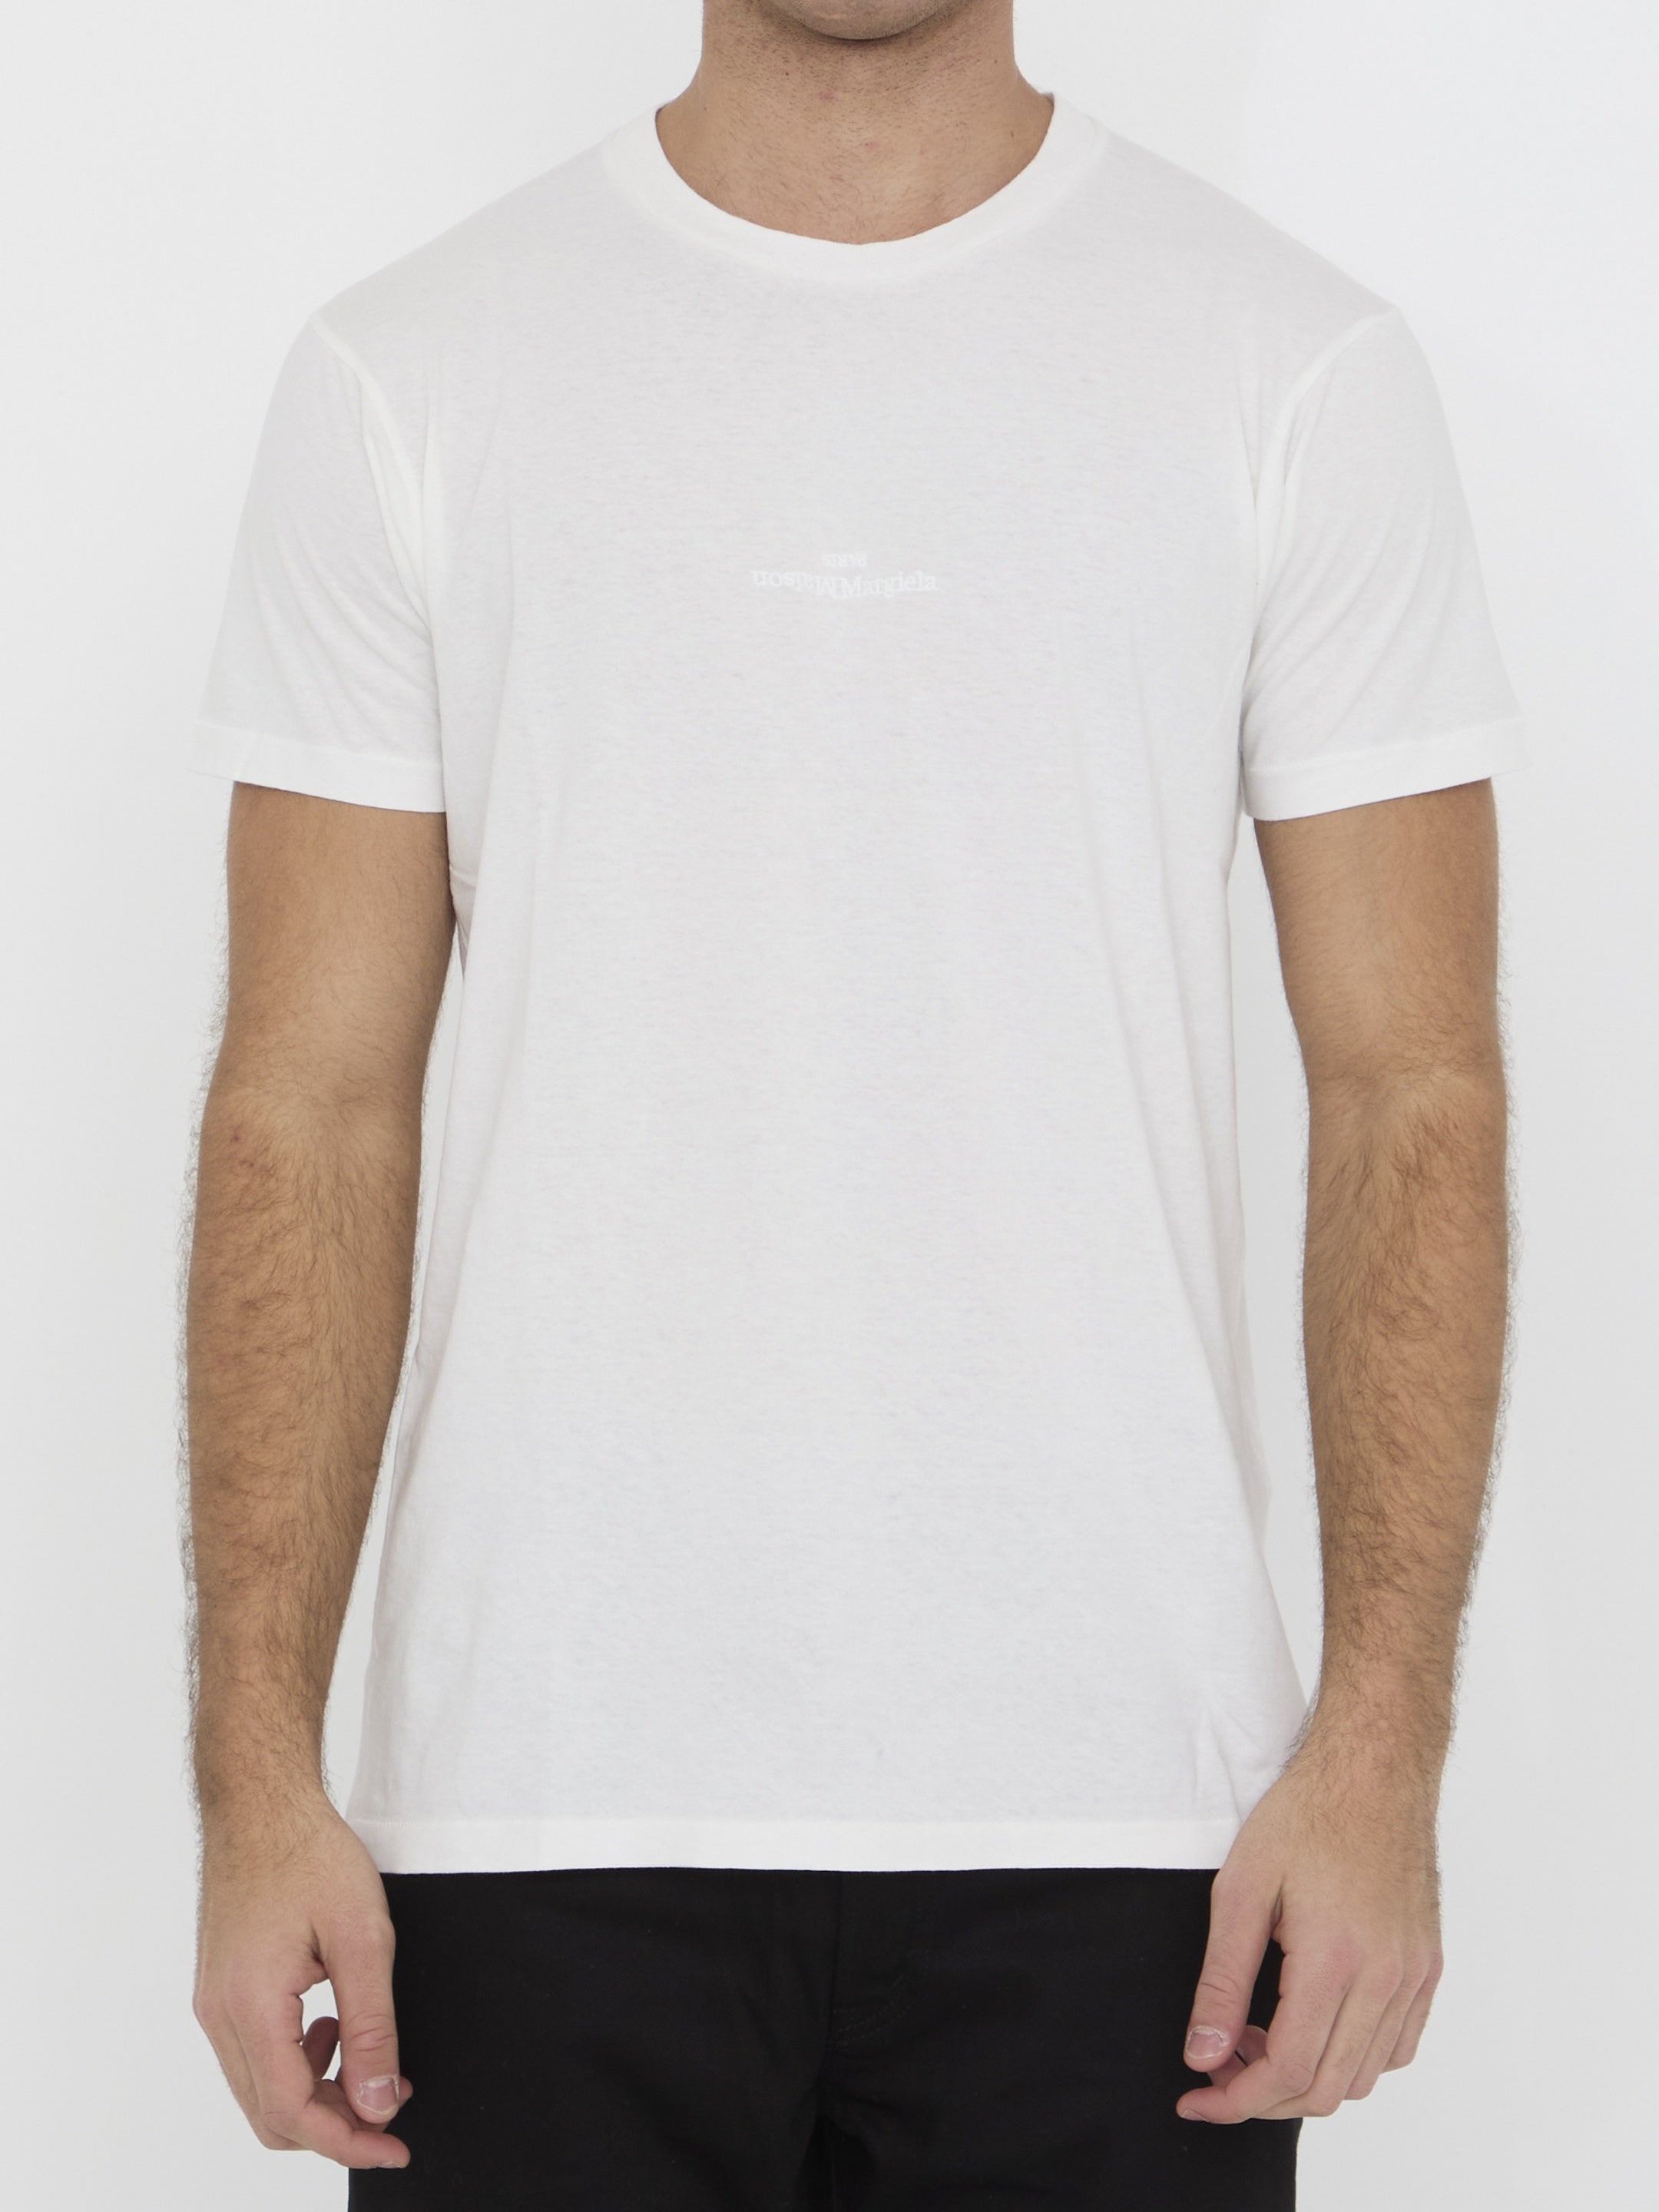 MAISON-MARGIELA-OUTLET-SALE-Reverse-logo-t-shirt-Shirts-L-WHITE-ARCHIVE-COLLECTION.jpg